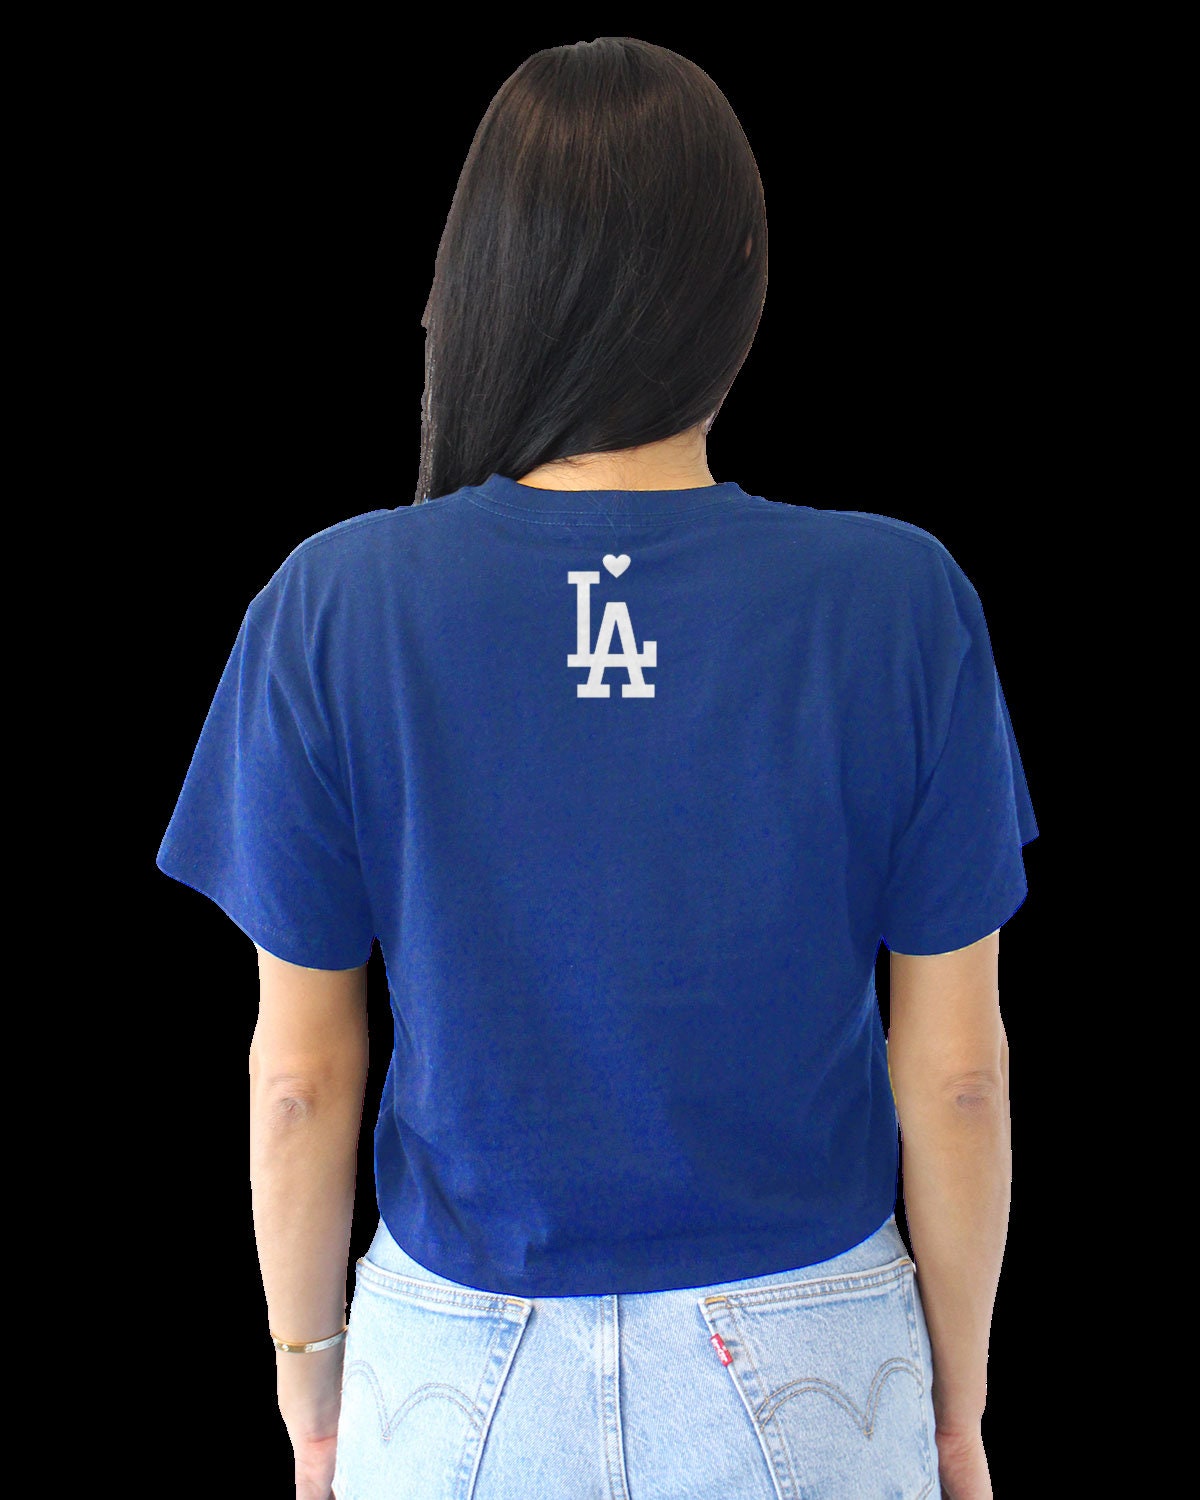 Hello Kitty LA Dodgers t-shirt